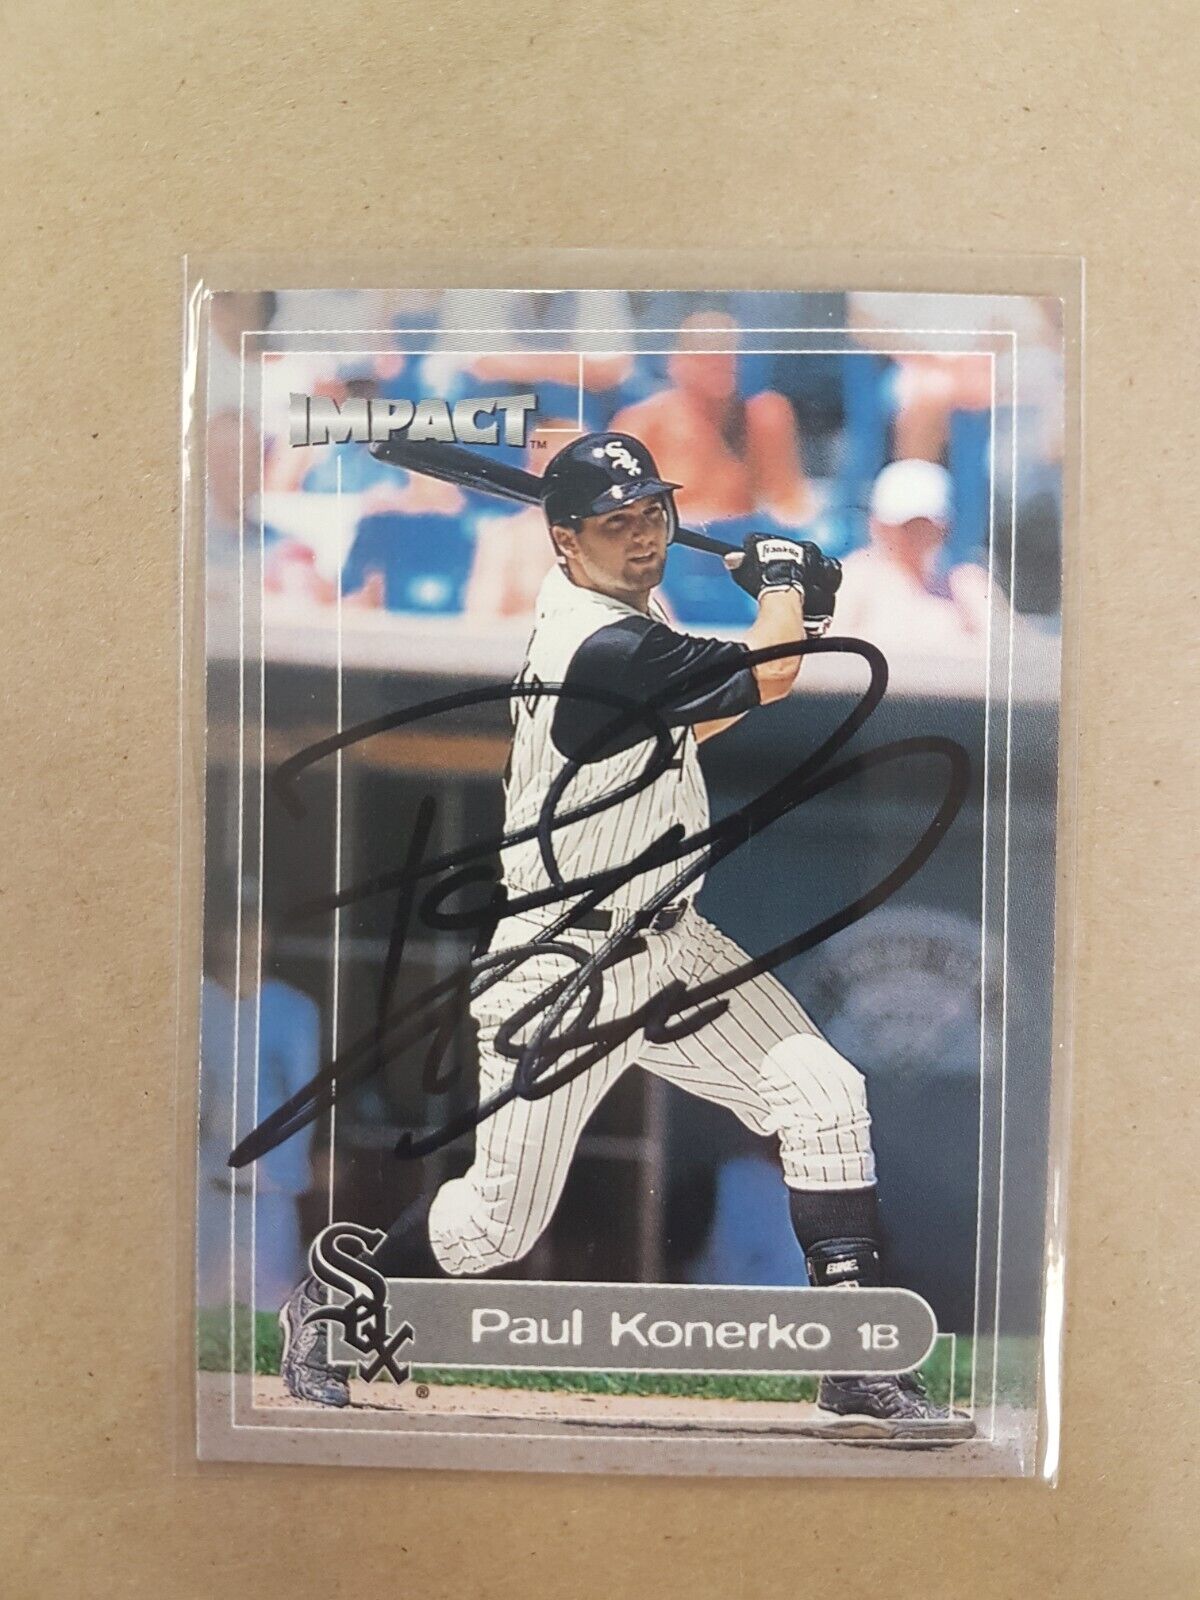 Paul Konerko Impact Autograph Photo SPORTS signed Baseball card MLB 95 2000